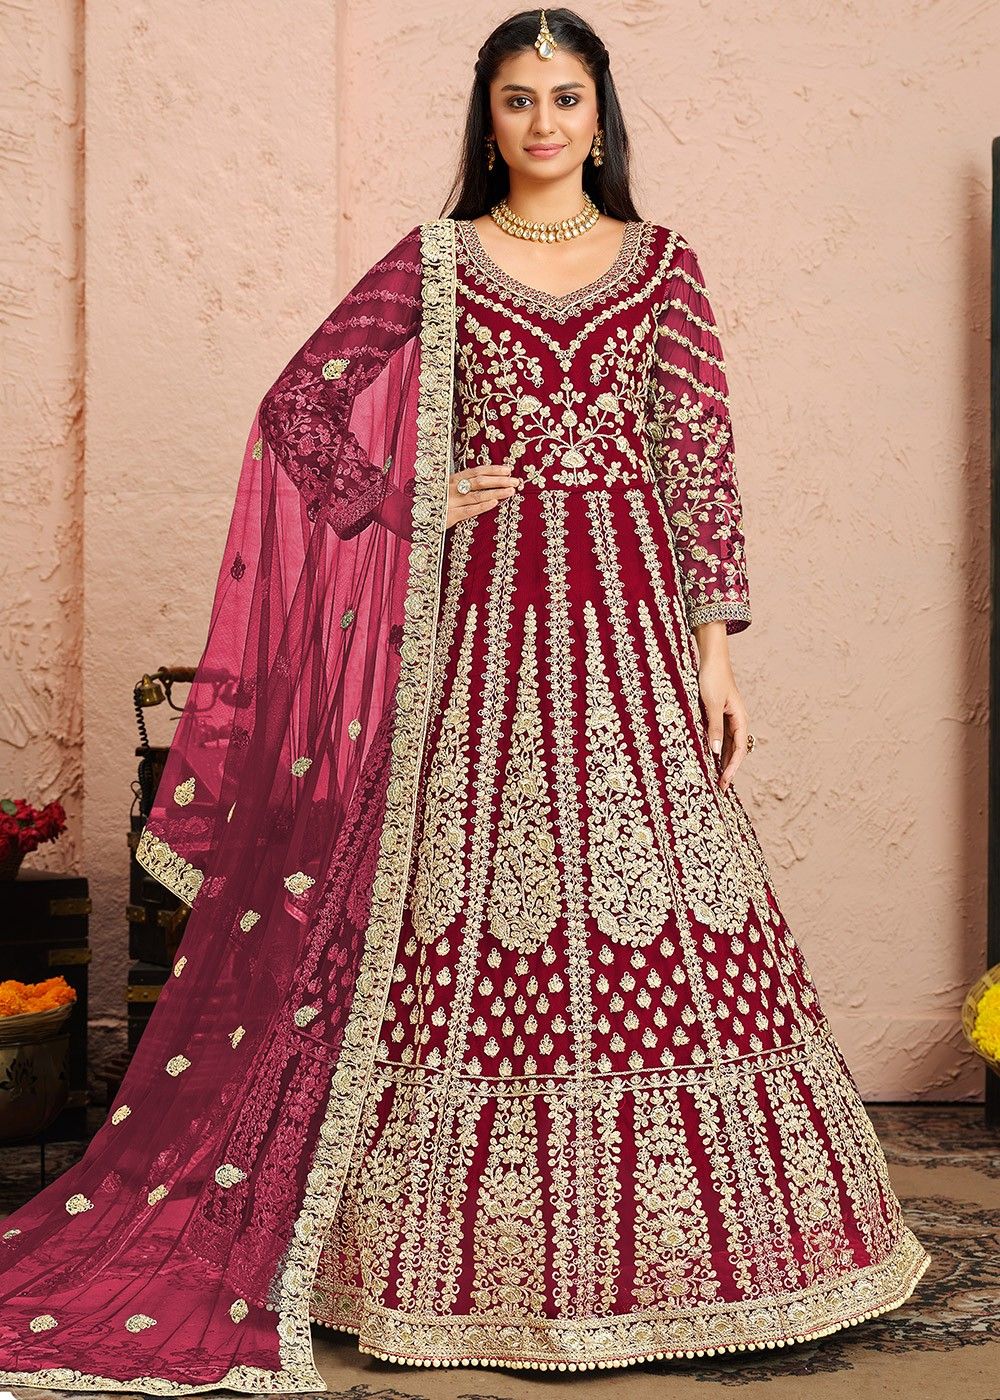 Bridal Red Heavy Golden Work Sharara Suit - Indian Heavy Anarkali Lehenga  Gowns Sharara Sarees Pakistani Dresses in USA/UK/Canada/UAE - IndiaBoulevard